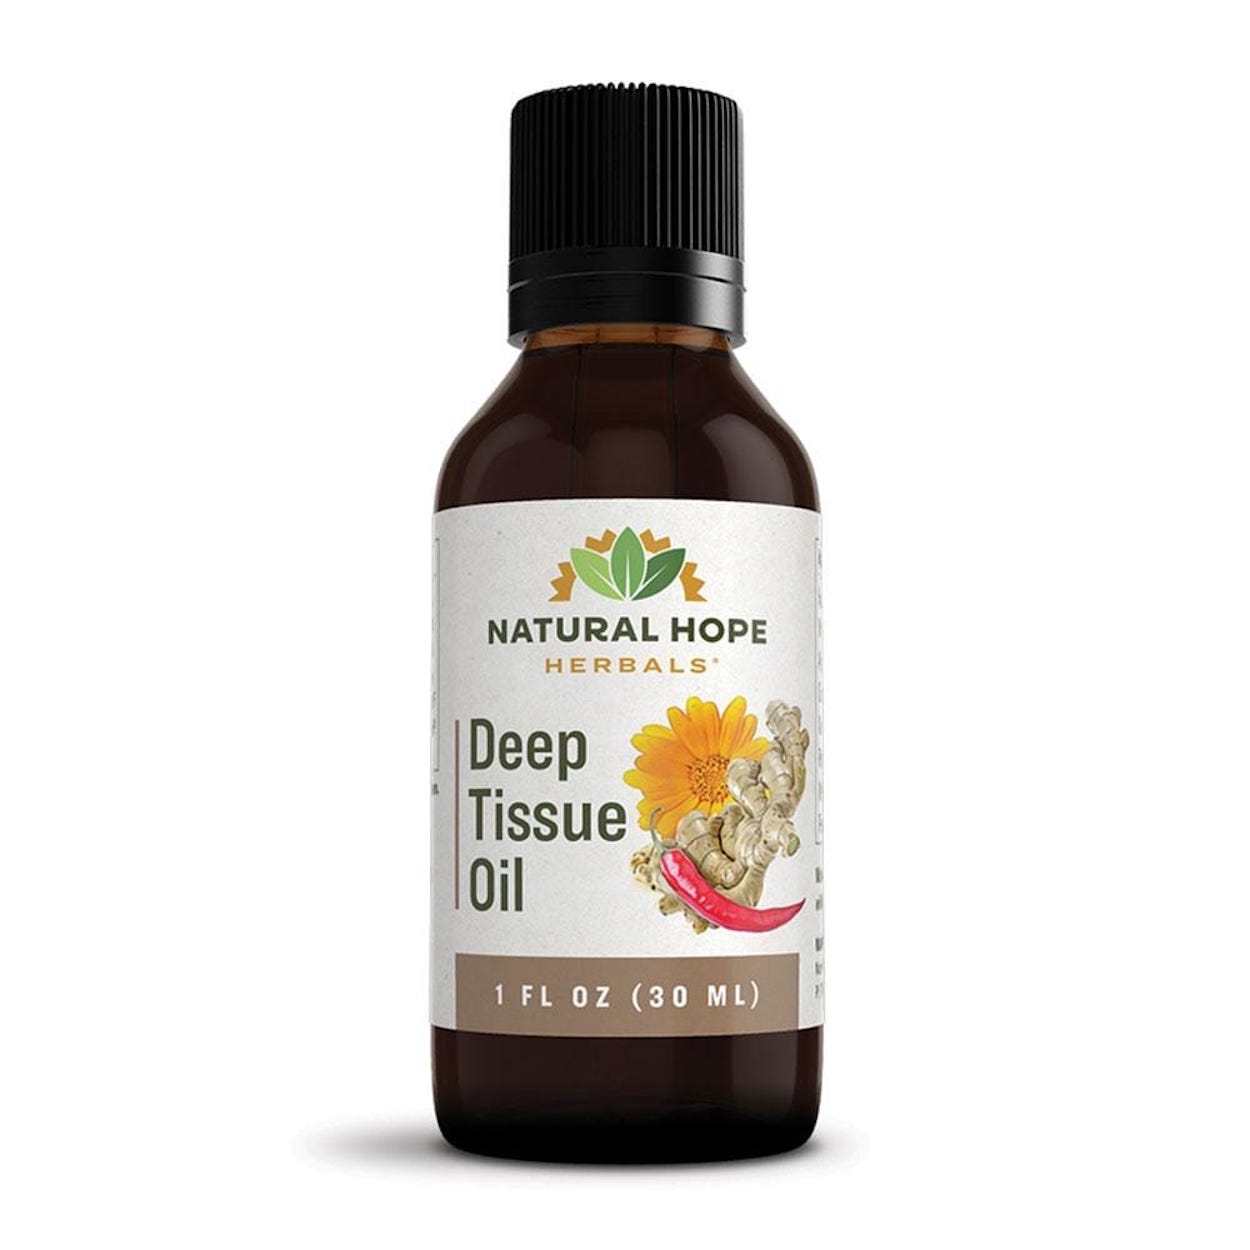 Deep Tissue Oil - Natural Hope Herbals